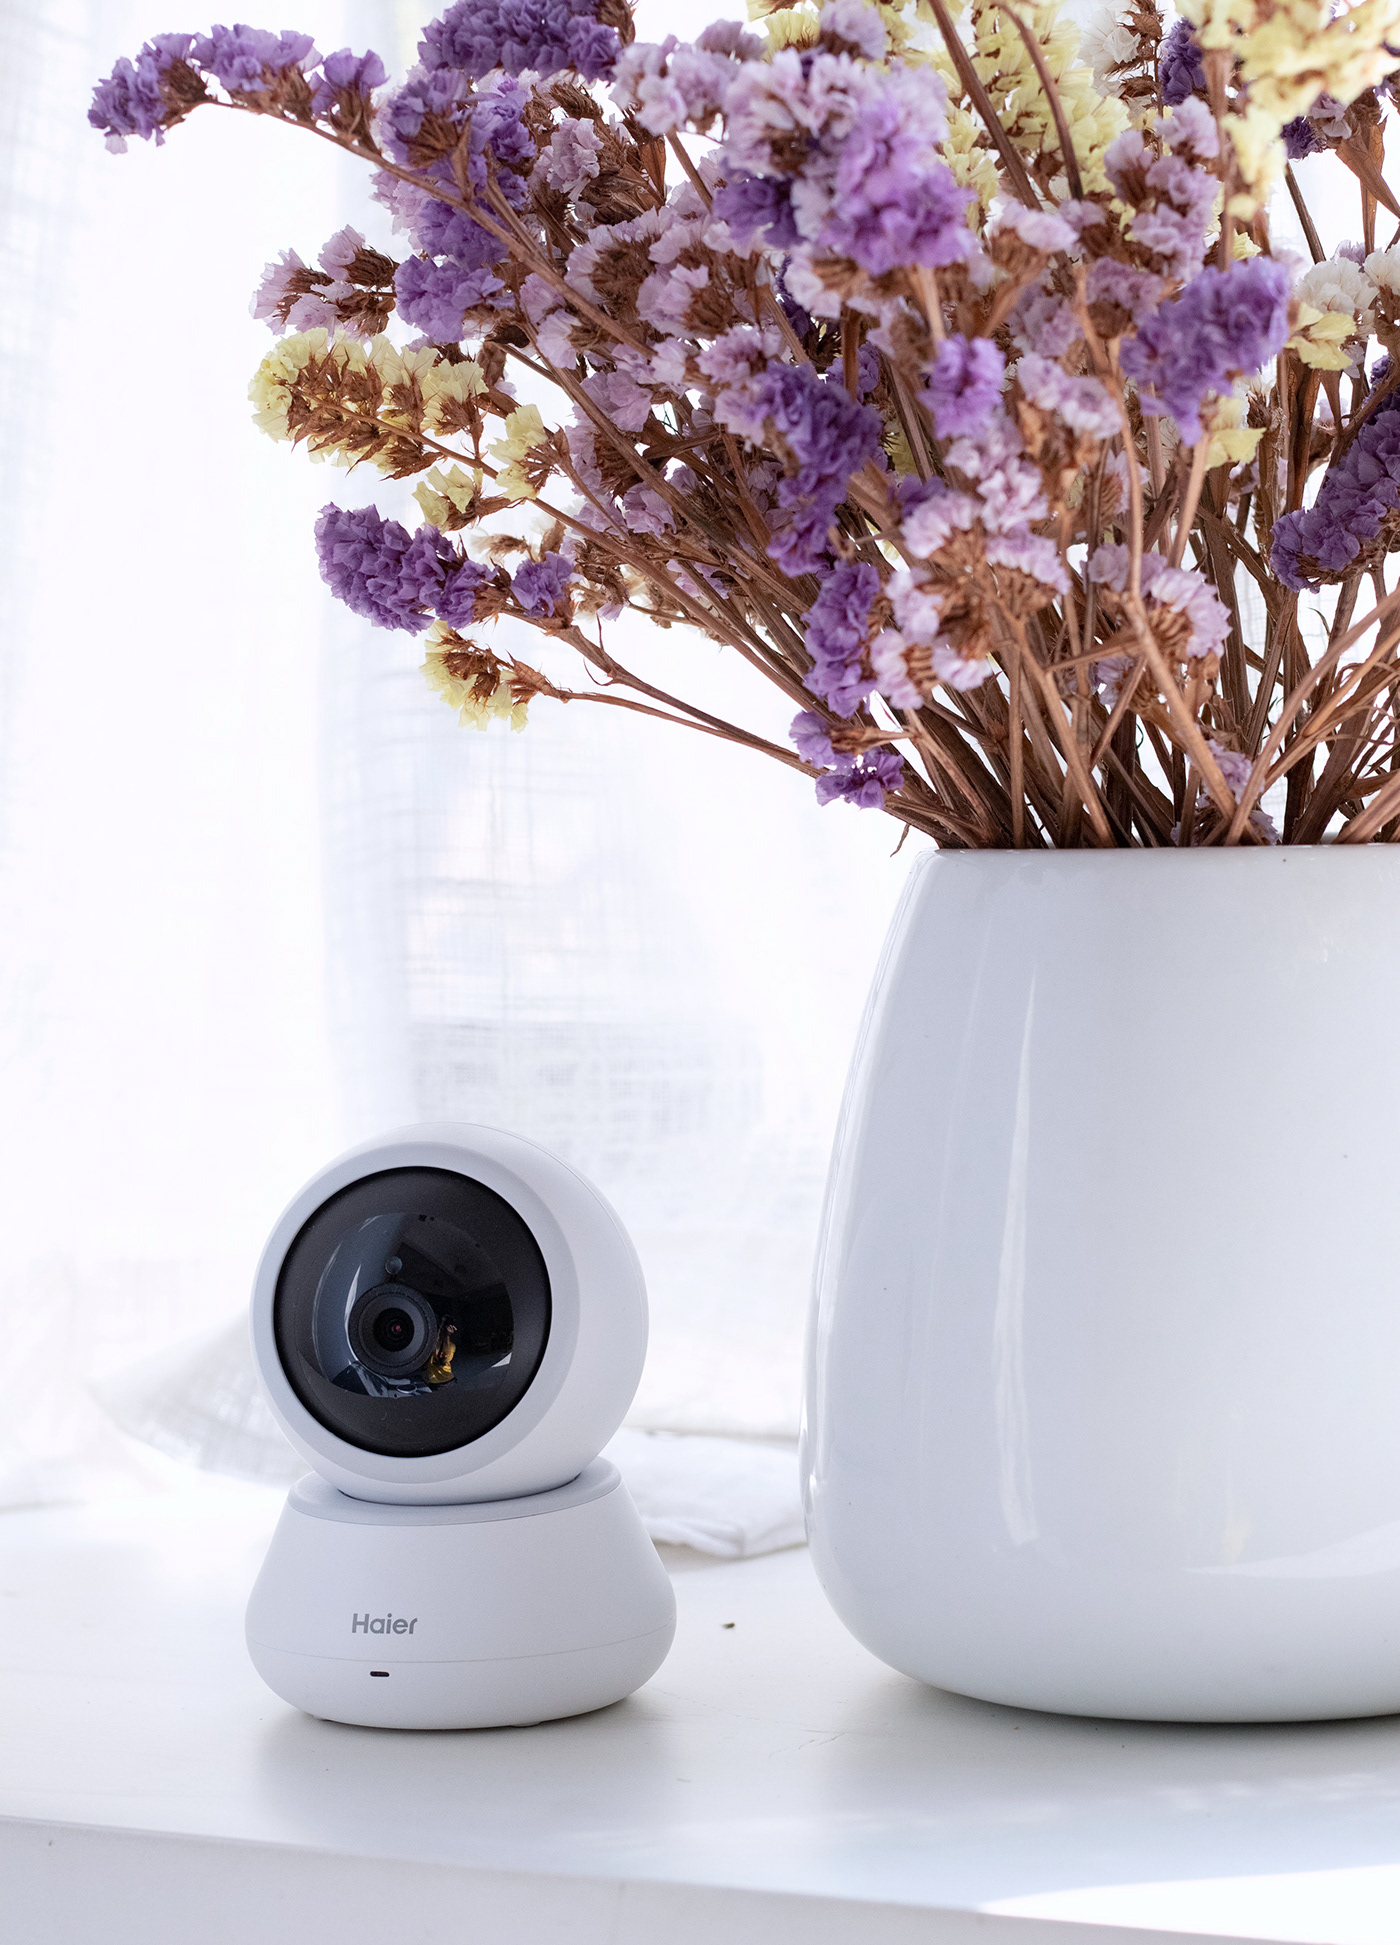 camera product design  industrial design  hai'er surveillance camera